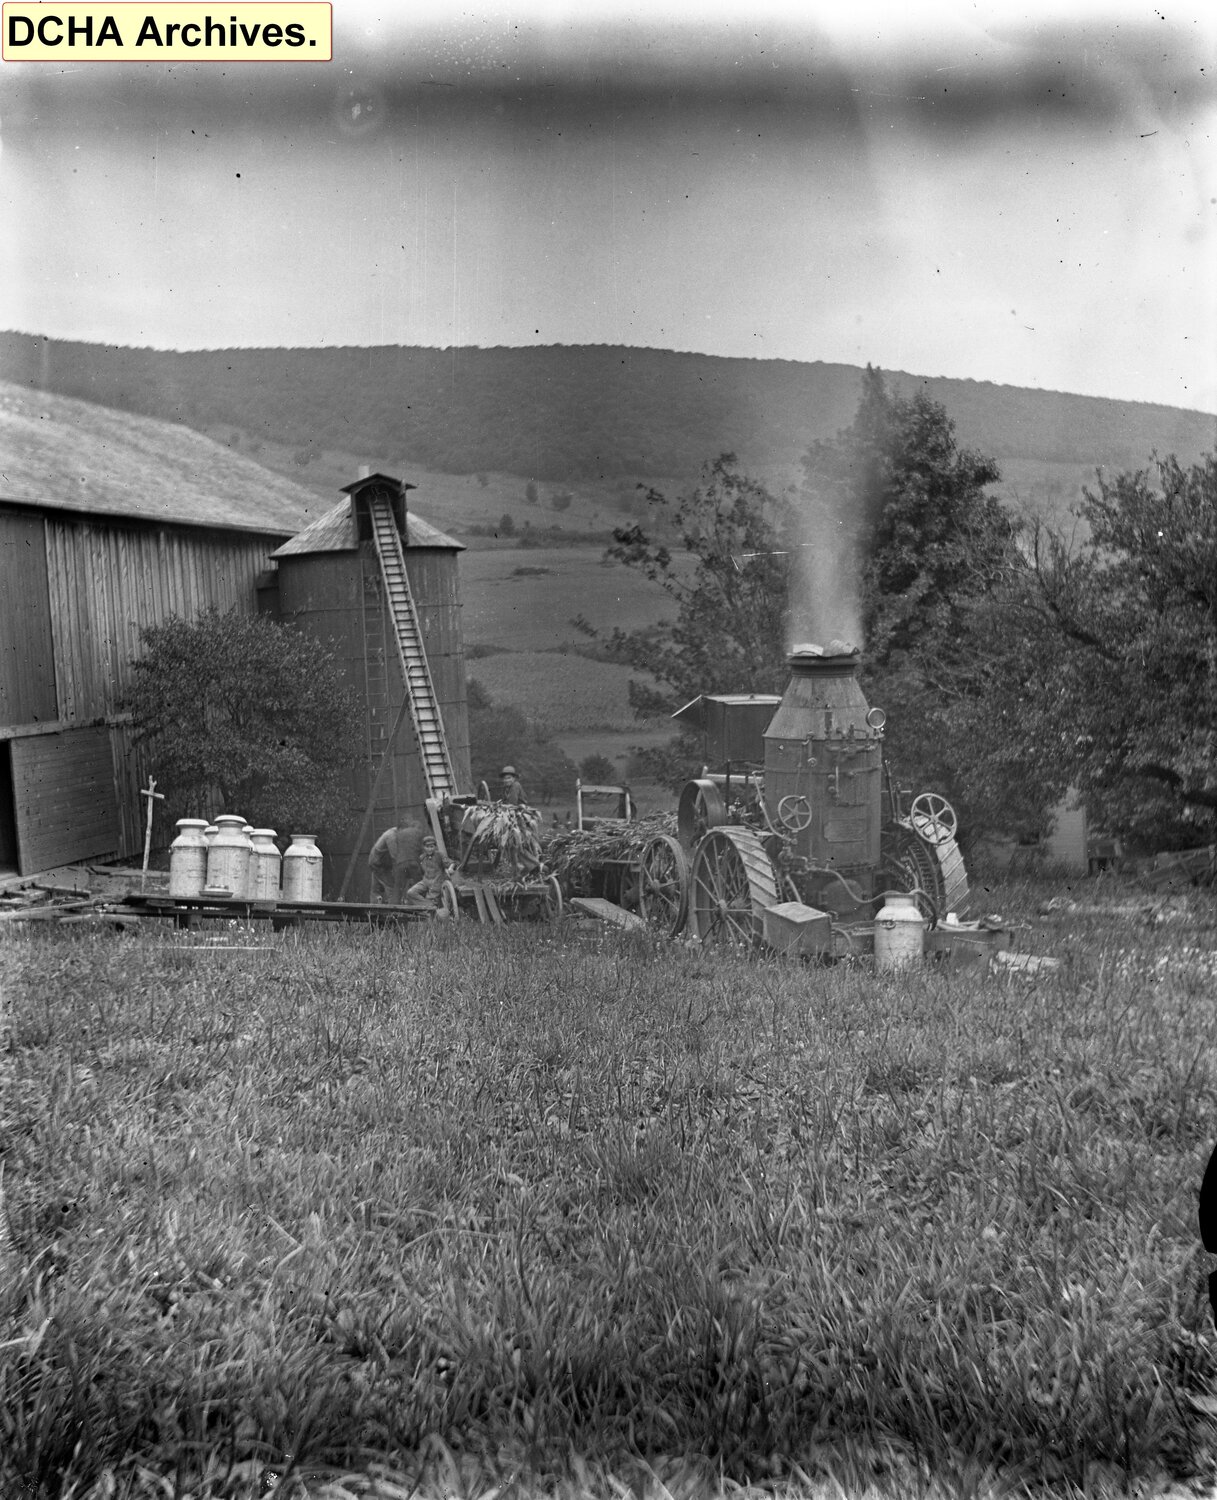 Burns Farm circa 1900, Bovina.